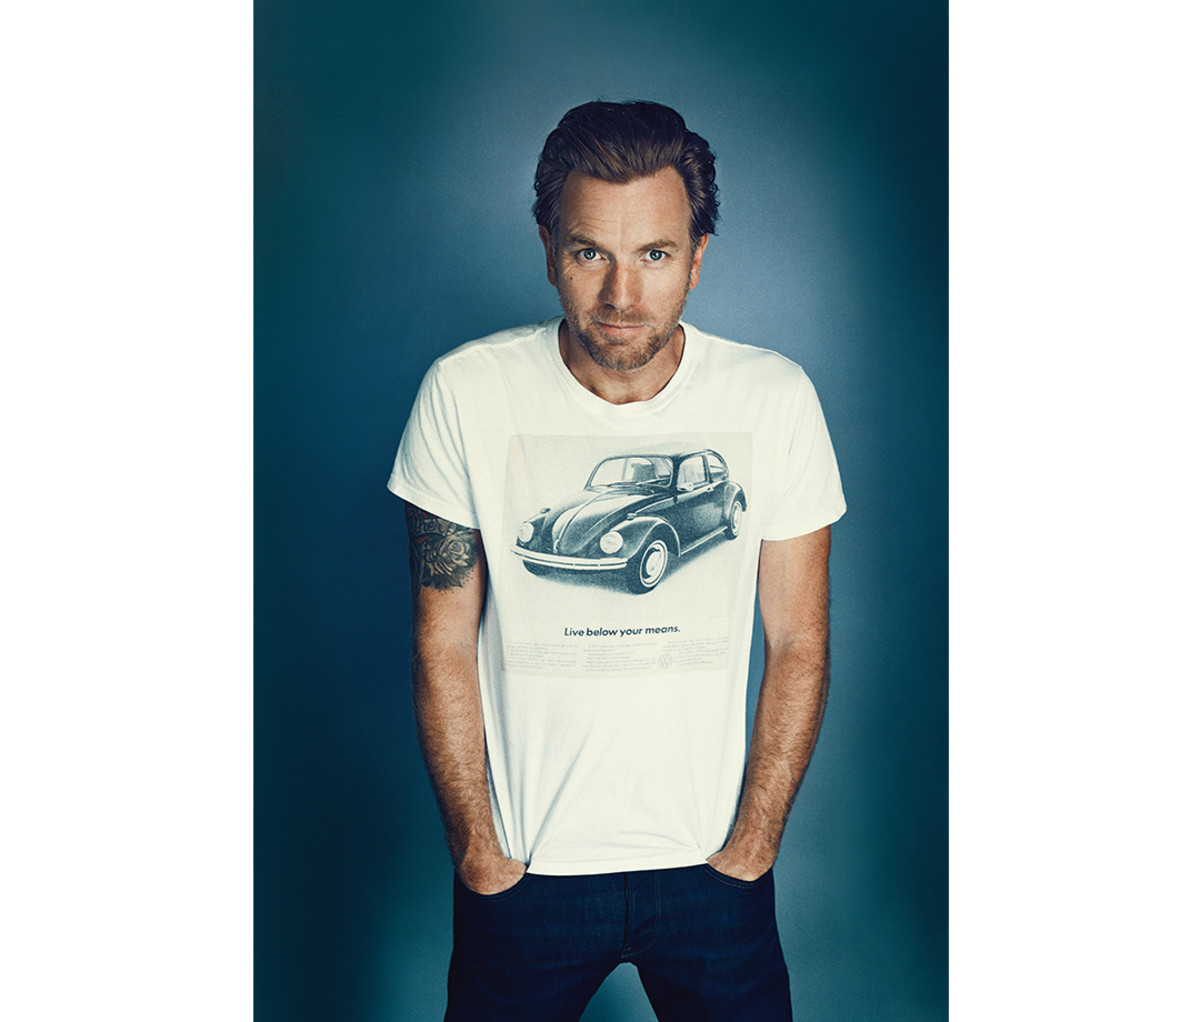 McGregor wears T-shirt by Calvin Klein (his own)